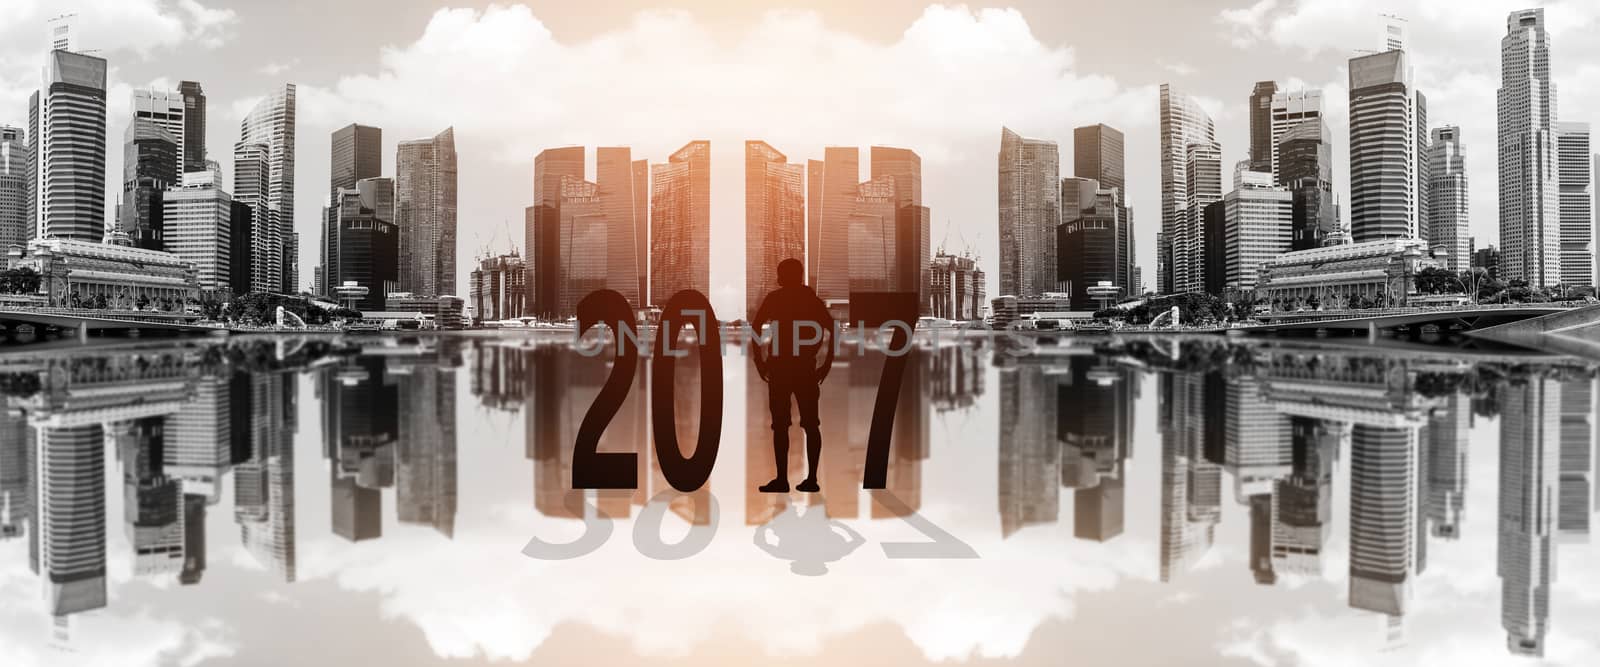 Happy news year 2017 background by wattanaphob